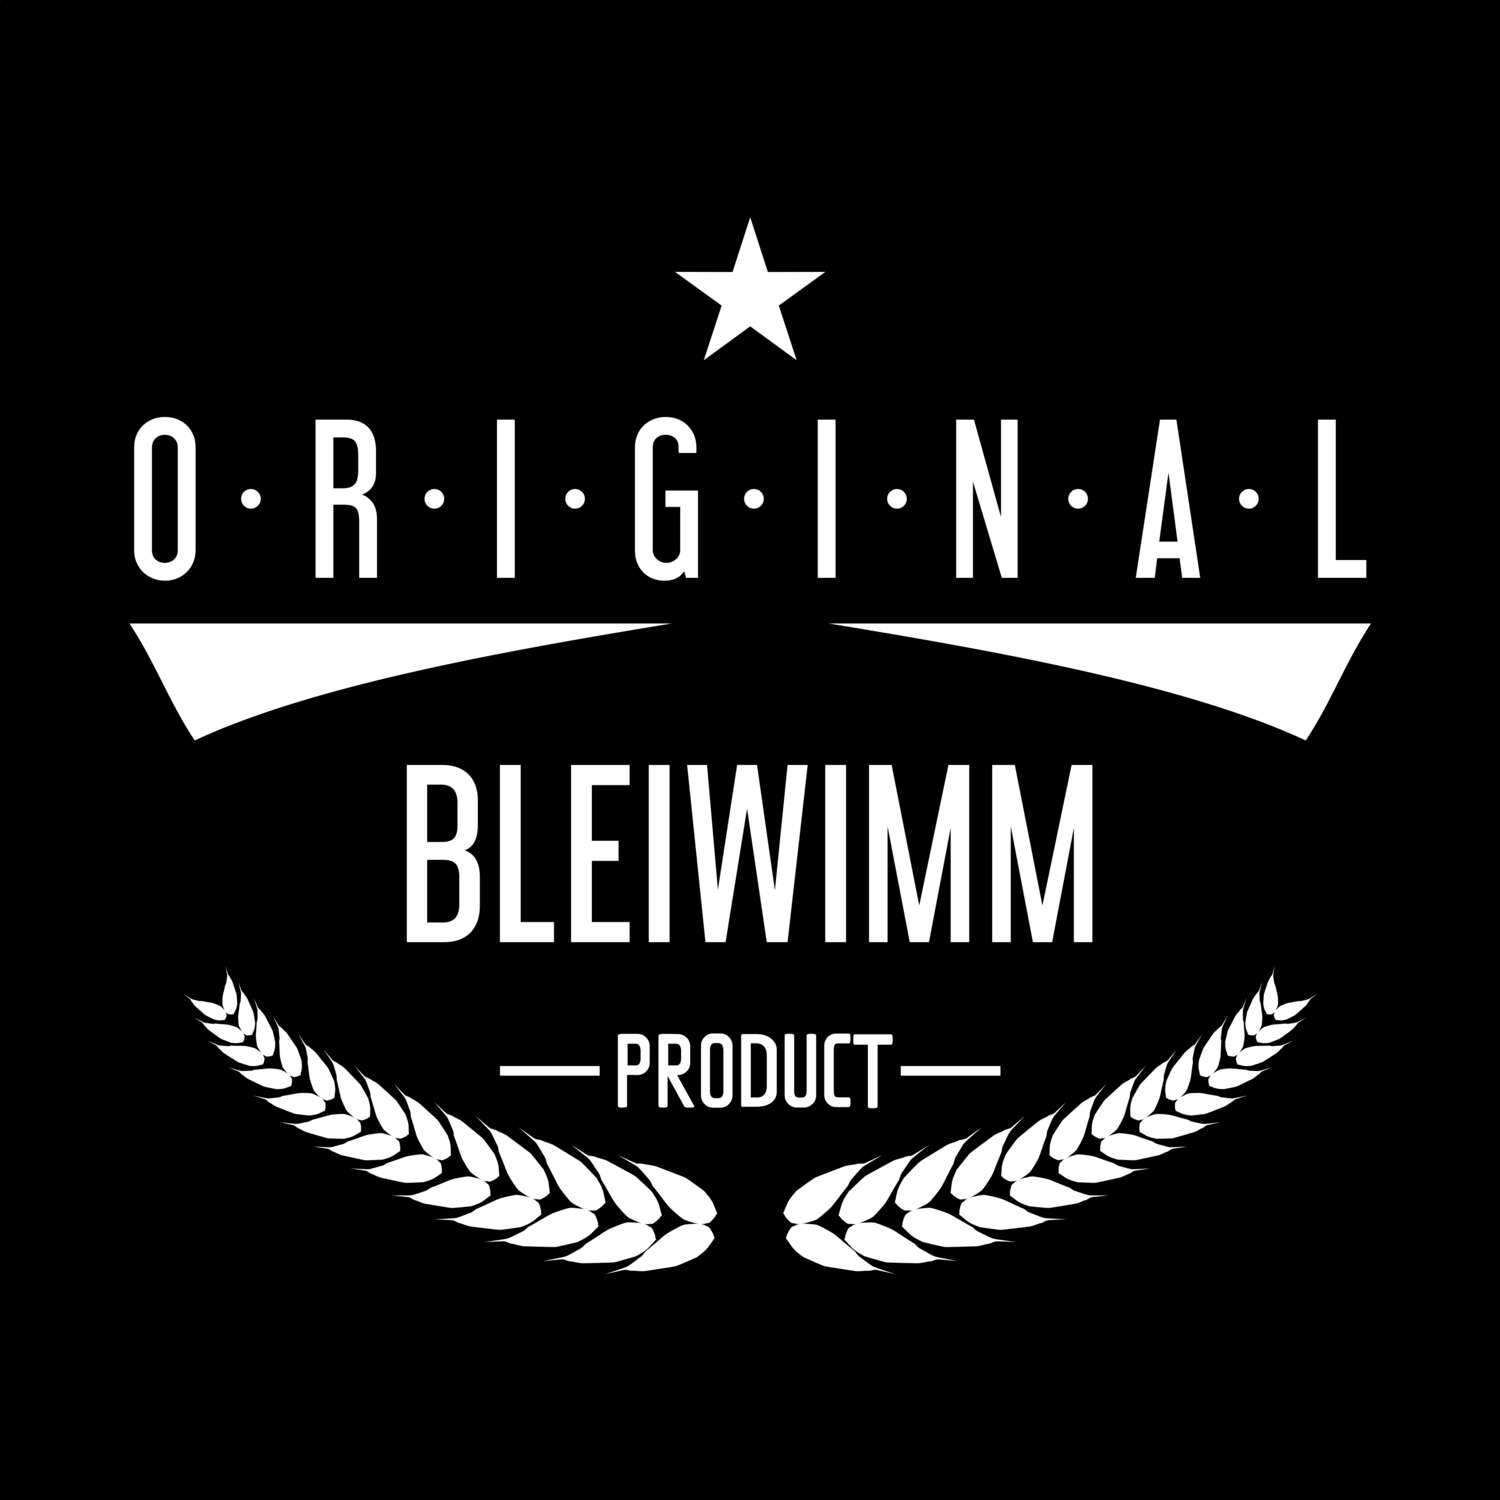 Bleiwimm T-Shirt »Original Product«